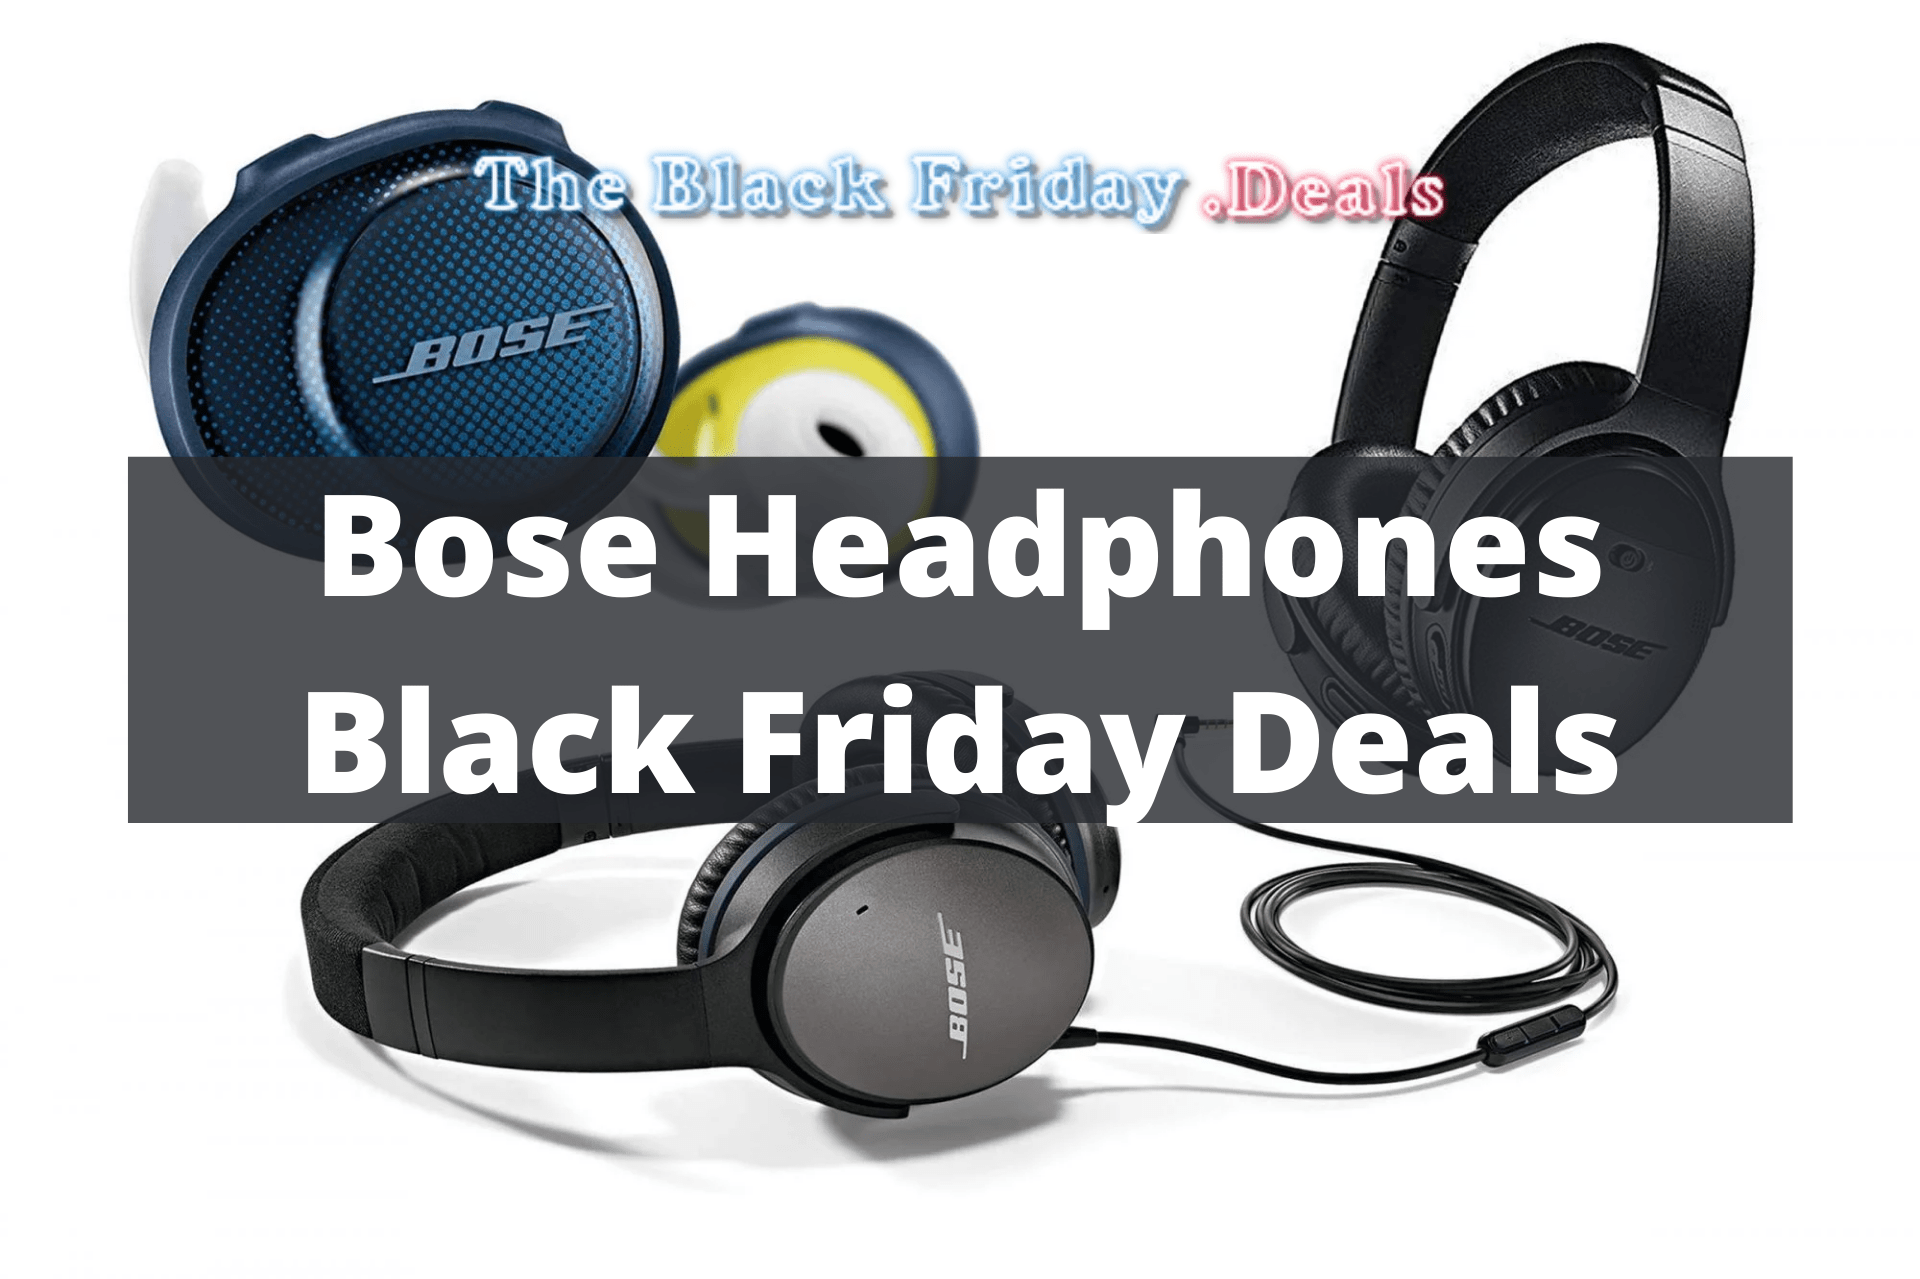 Bose Headphones Black Friday Deals